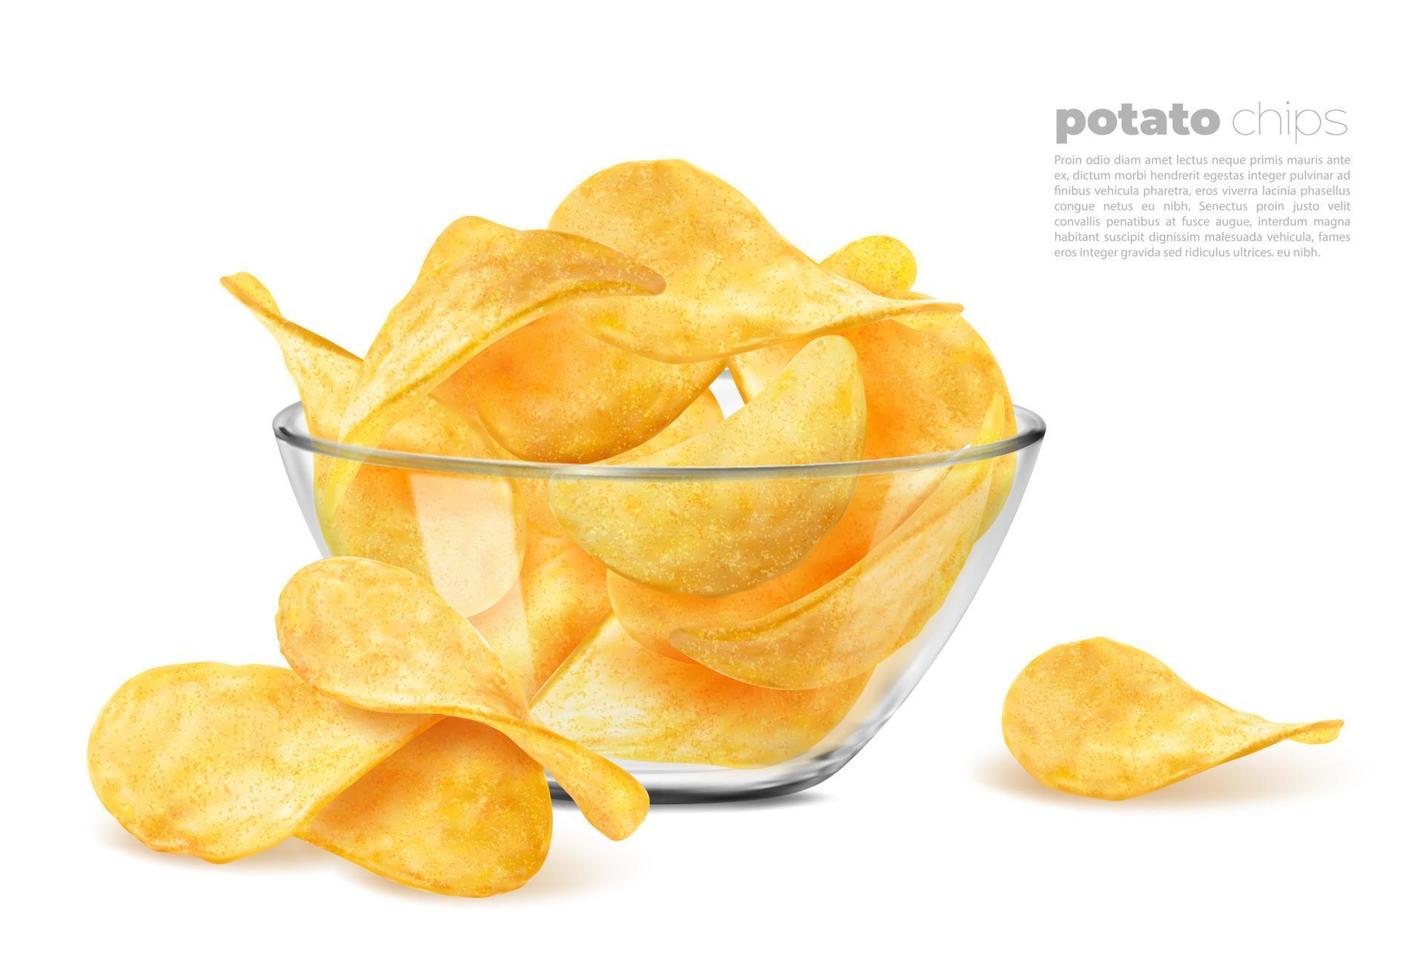 Crispy wavy potato chips in glass bowl background vector